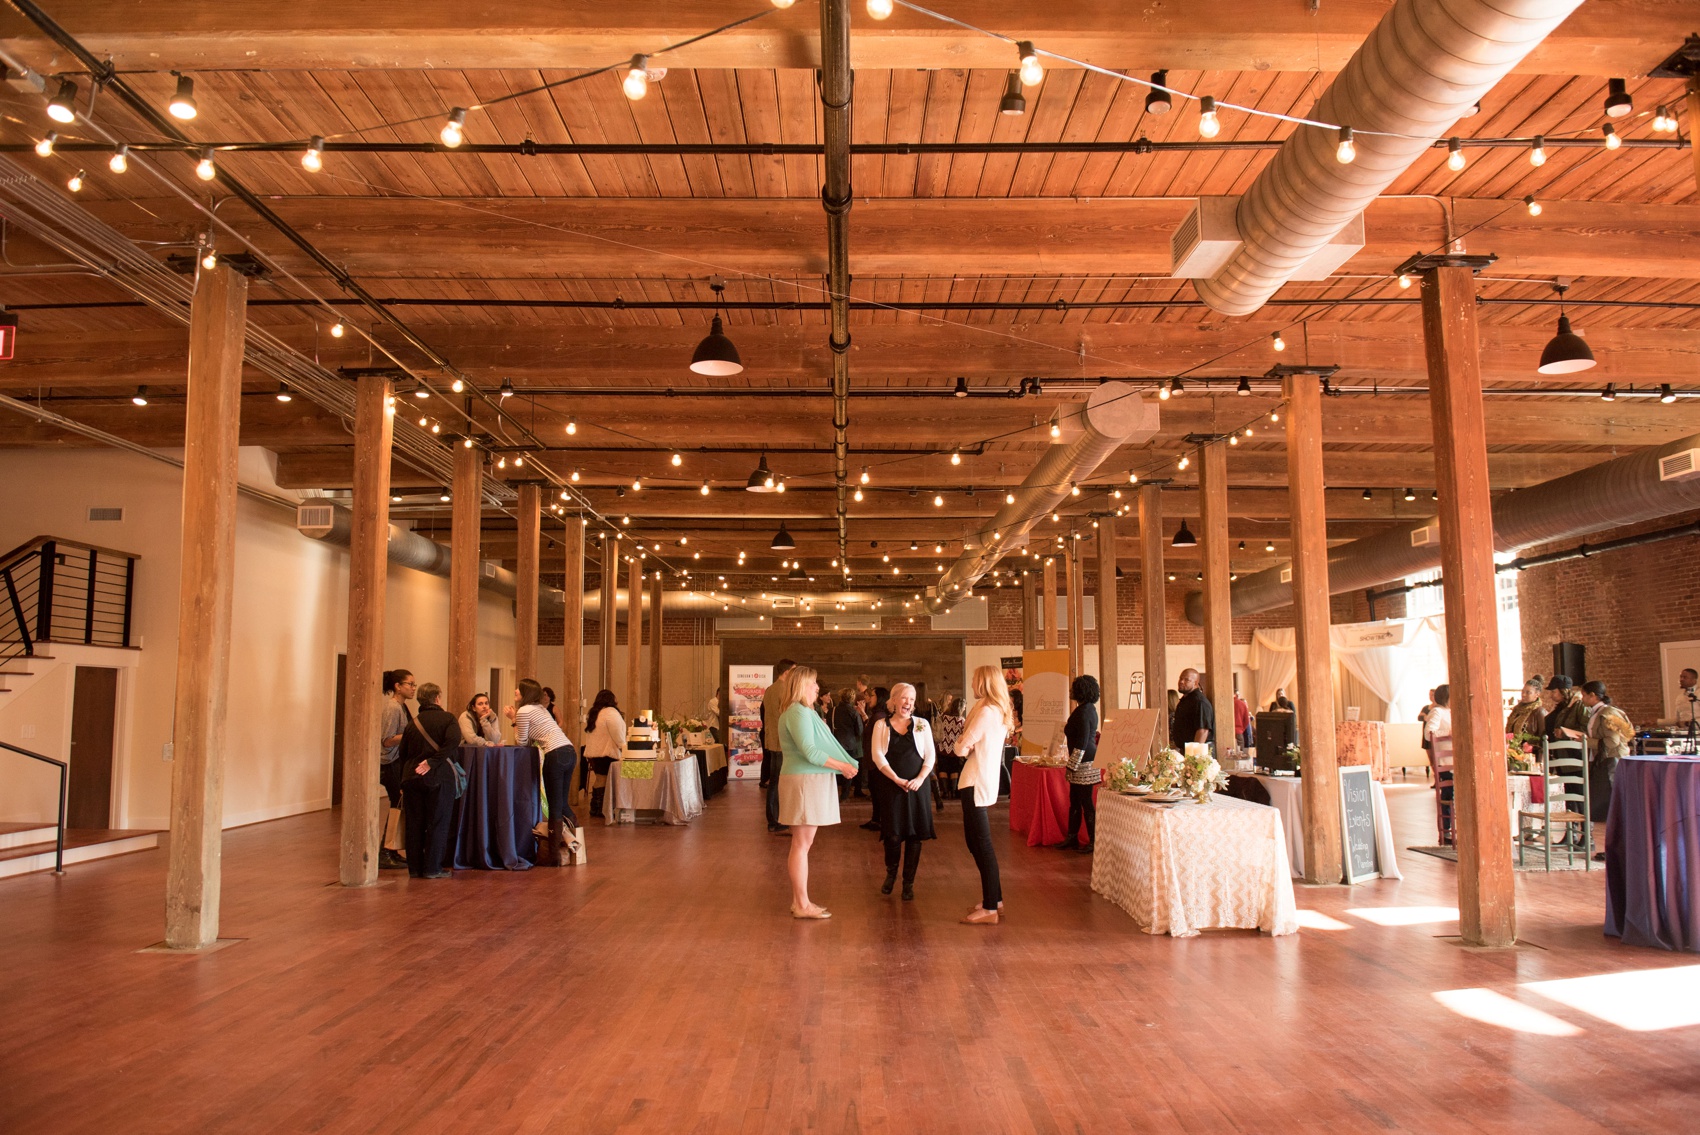 The Cloth Mill North Carolina wedding vendor showcase. Raleigh, Durham and Hillsborough vendors at a rustic, modern location. 